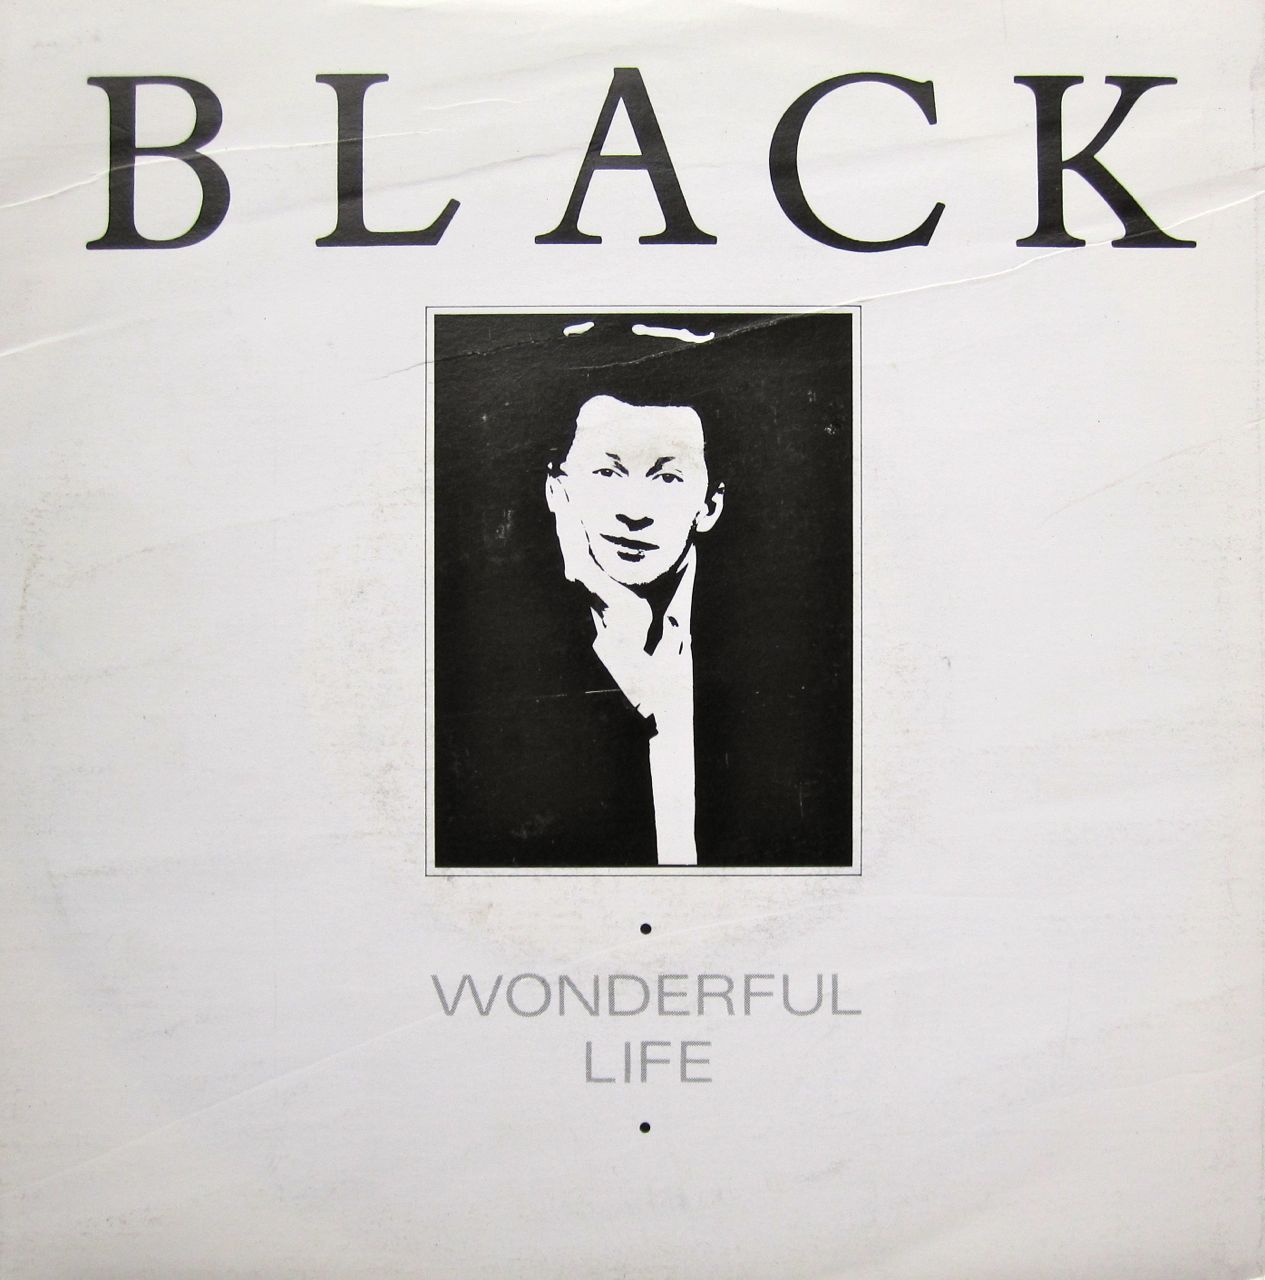 Wonderful life. Black певец wonderful Life. Black wonderful Life обложка. Black wonderful Life 1987. Wonderful Life Black Cover.